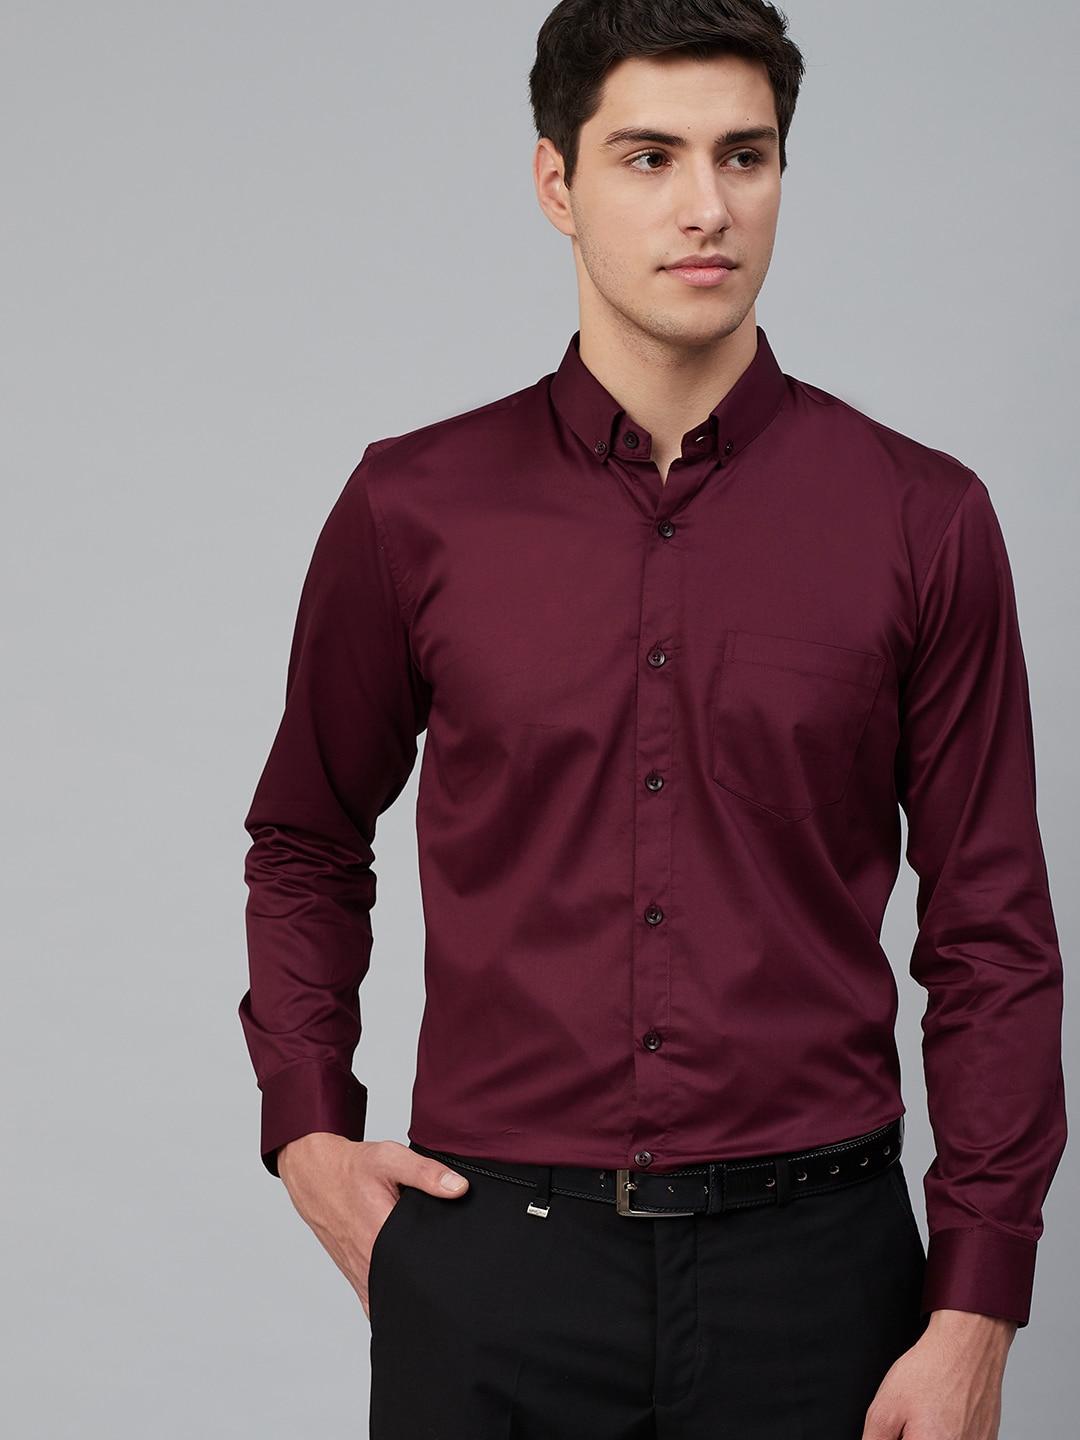 dennison-men-burgundy-twill-comfort-regular-fit-solid-formal-shirt